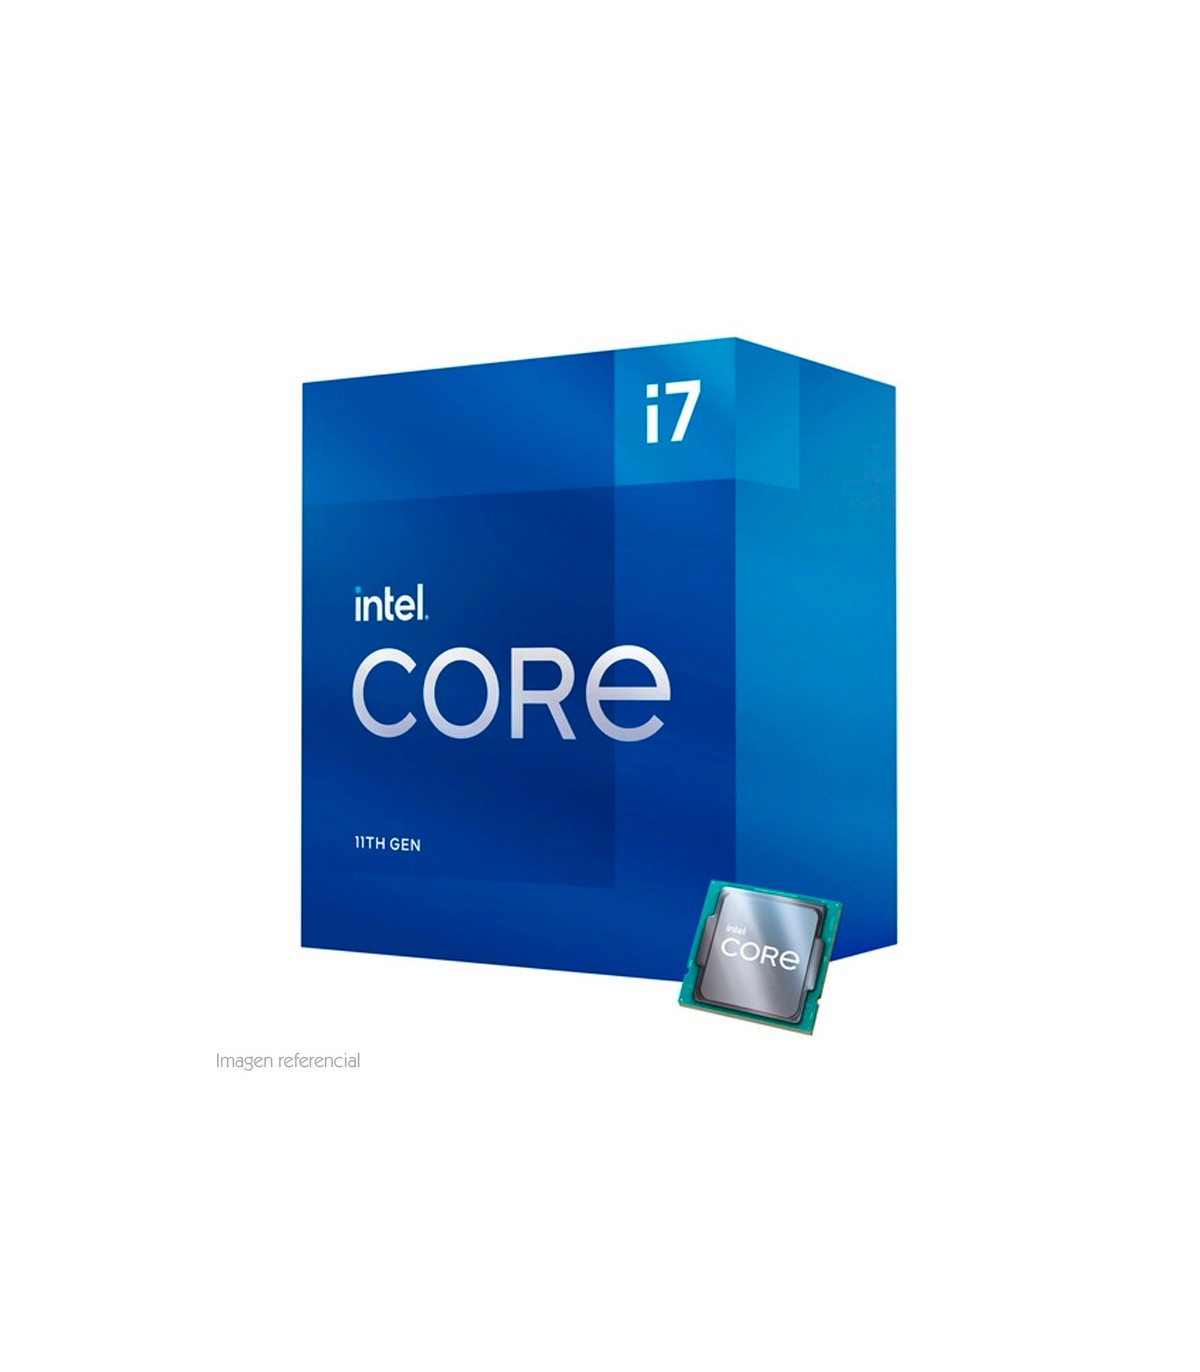 Imagen PC Gamer Core i7 11700, Video Intel 4 gigas, 8 Ram, SSD 240, Board Asus B560, Chasis XPG, Fuente 600 3